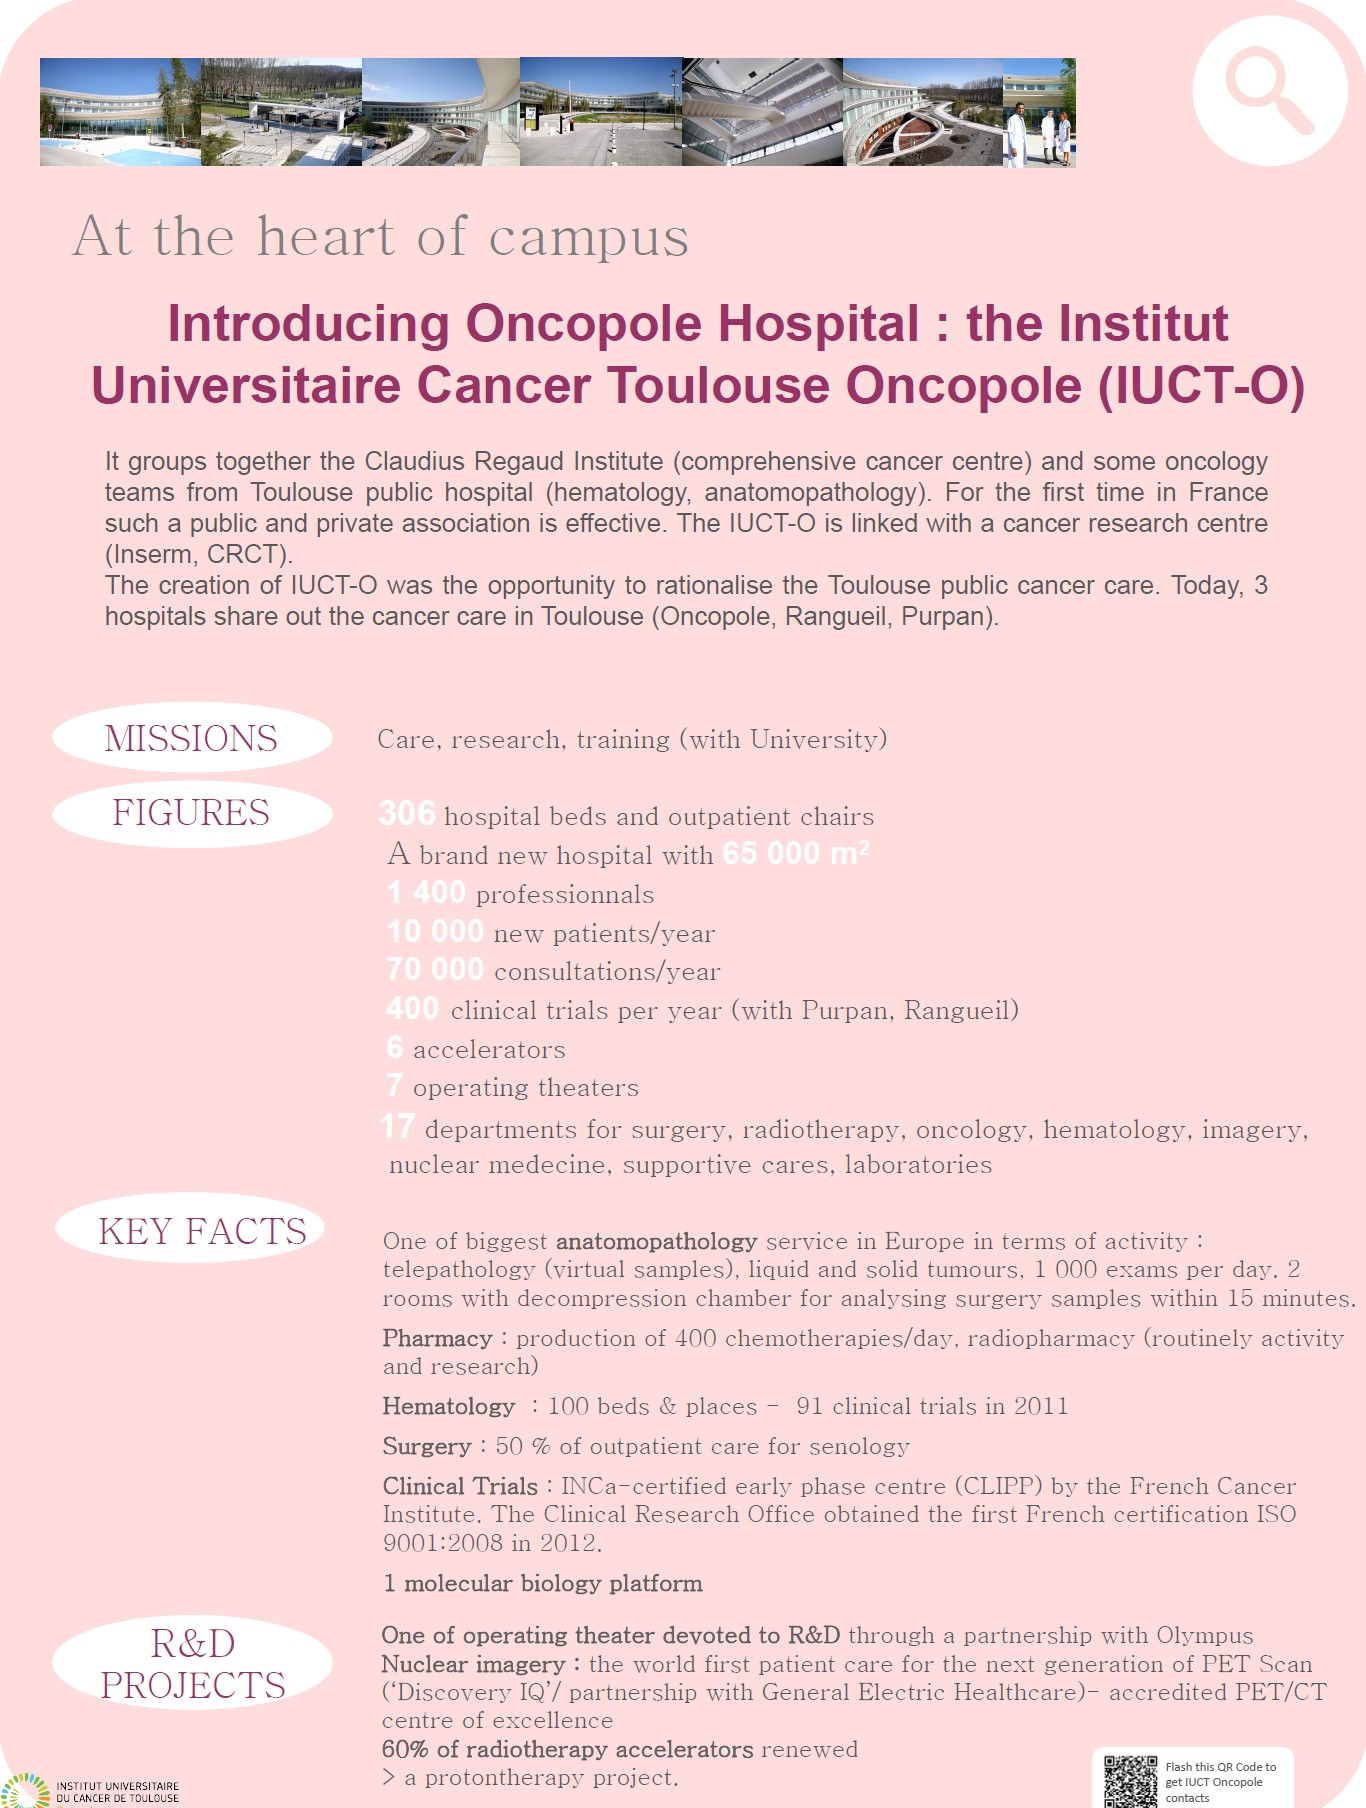 IUCT Oncopole key facts